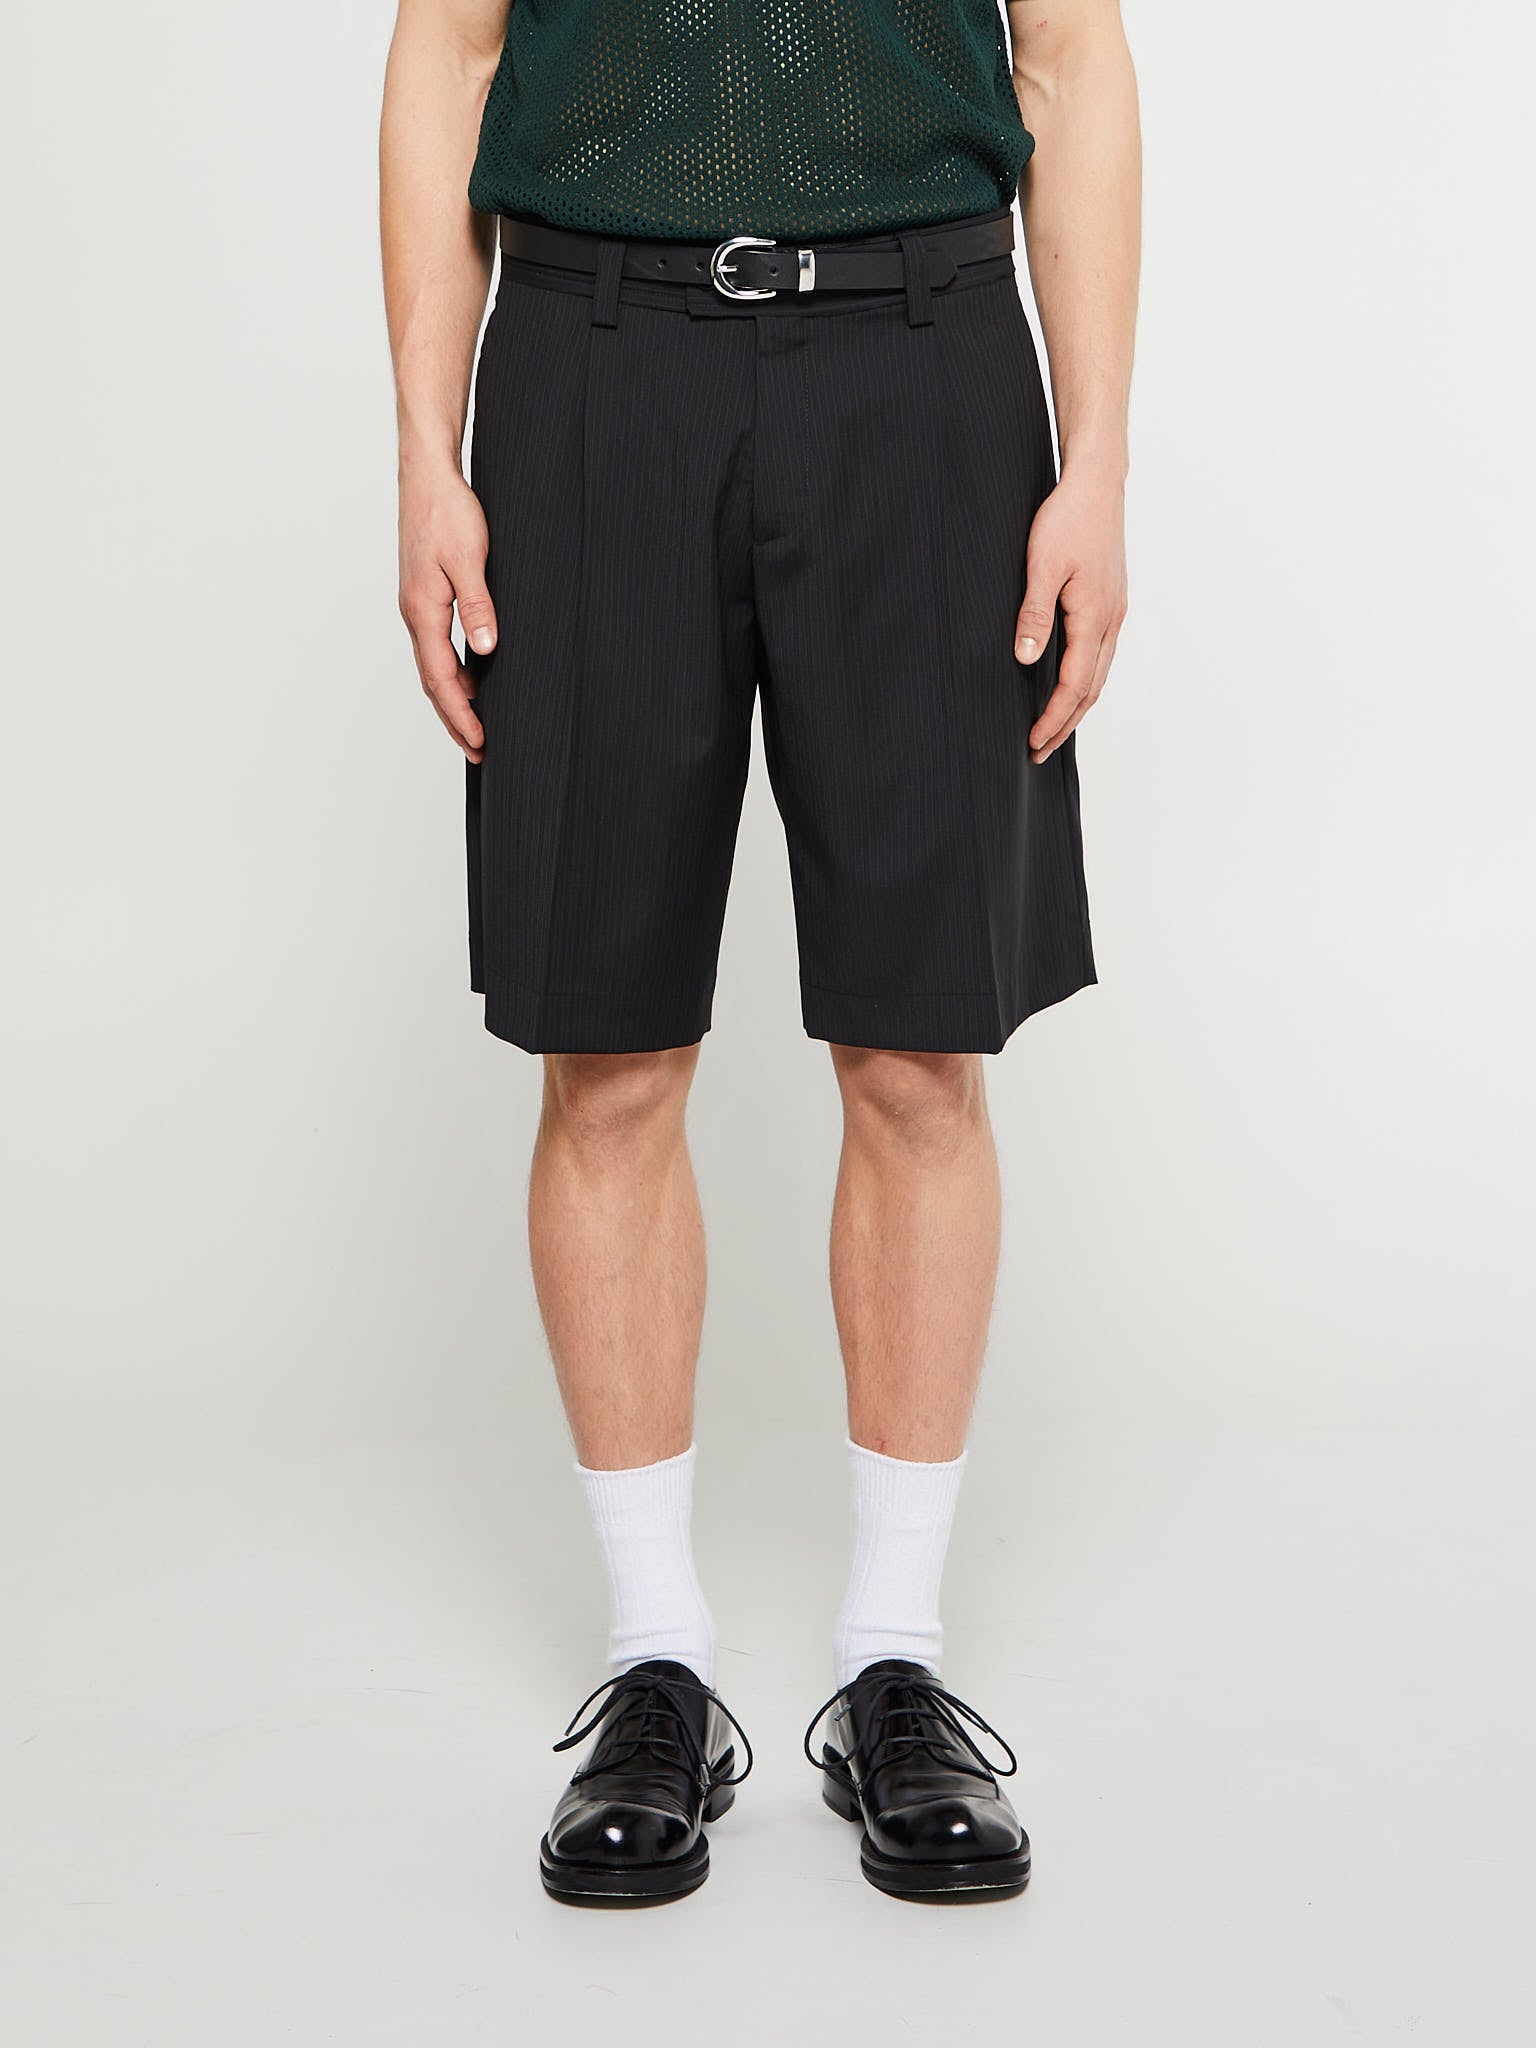 Mfpen - Classic Shorts in Black with Dark Grey Stripes